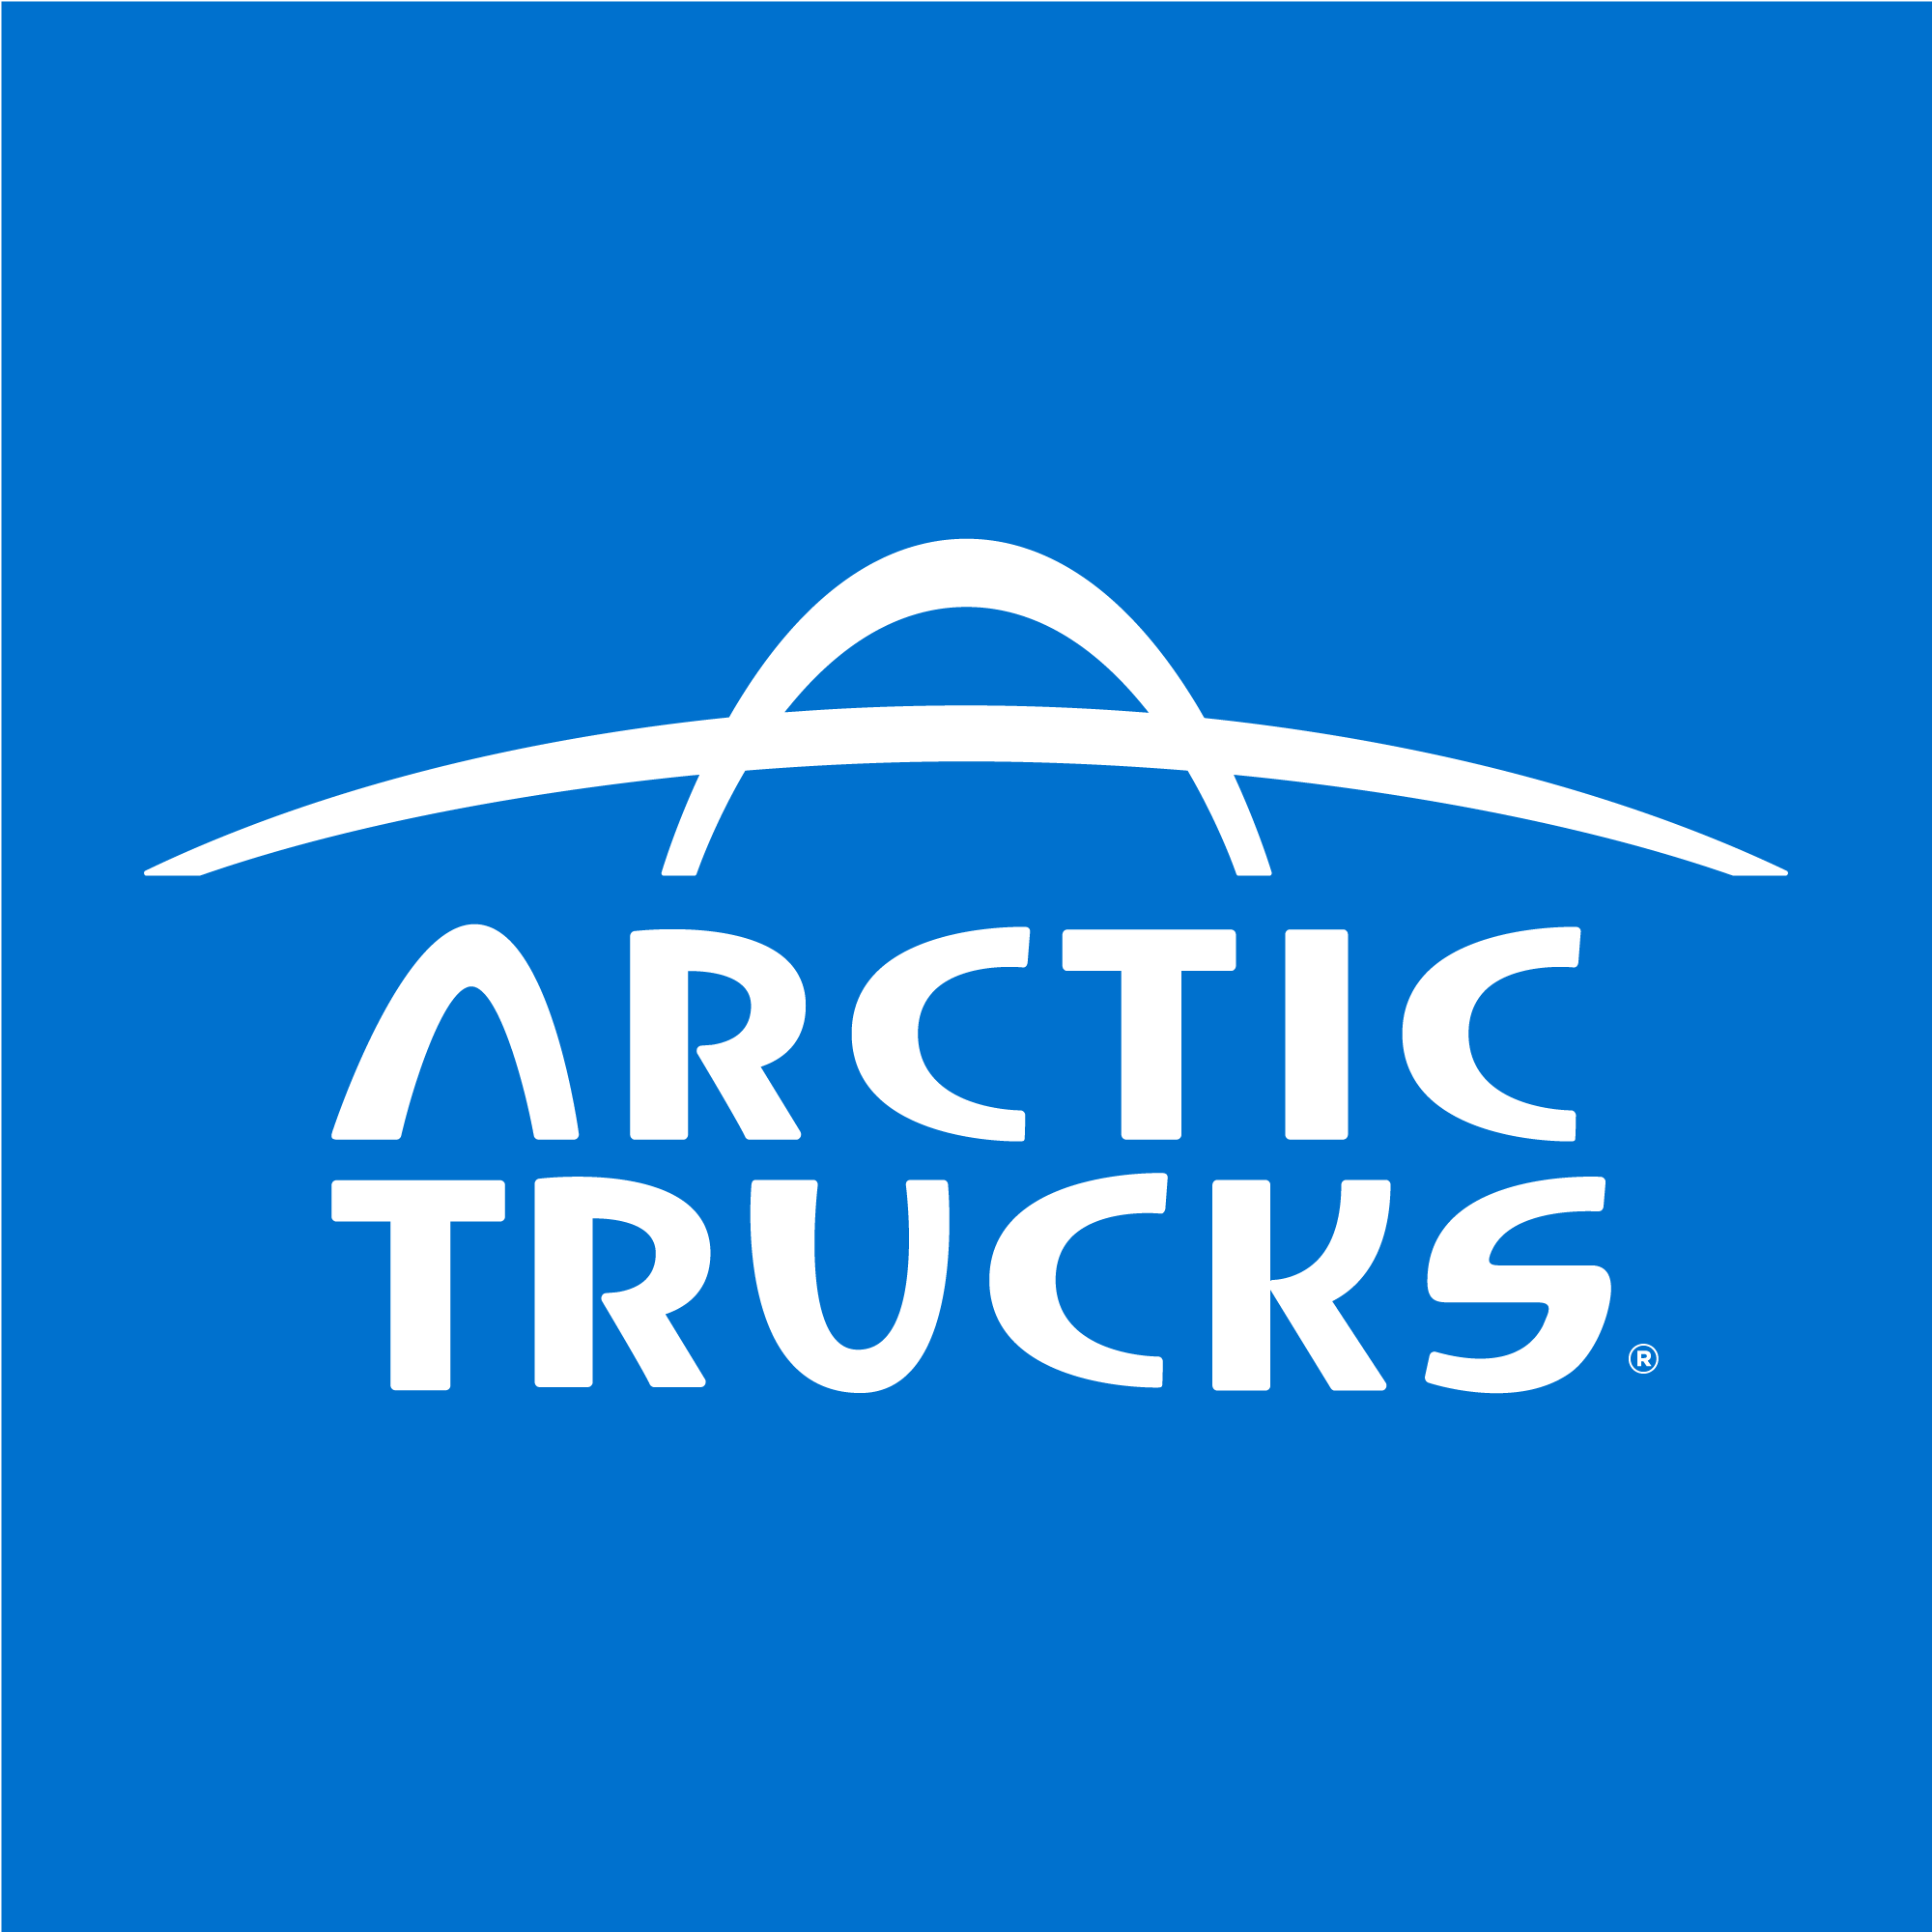 Norway 营销公司 Venturis AS 通过 SEO 和数字营销帮助了 Arctic Trucks 发展业务